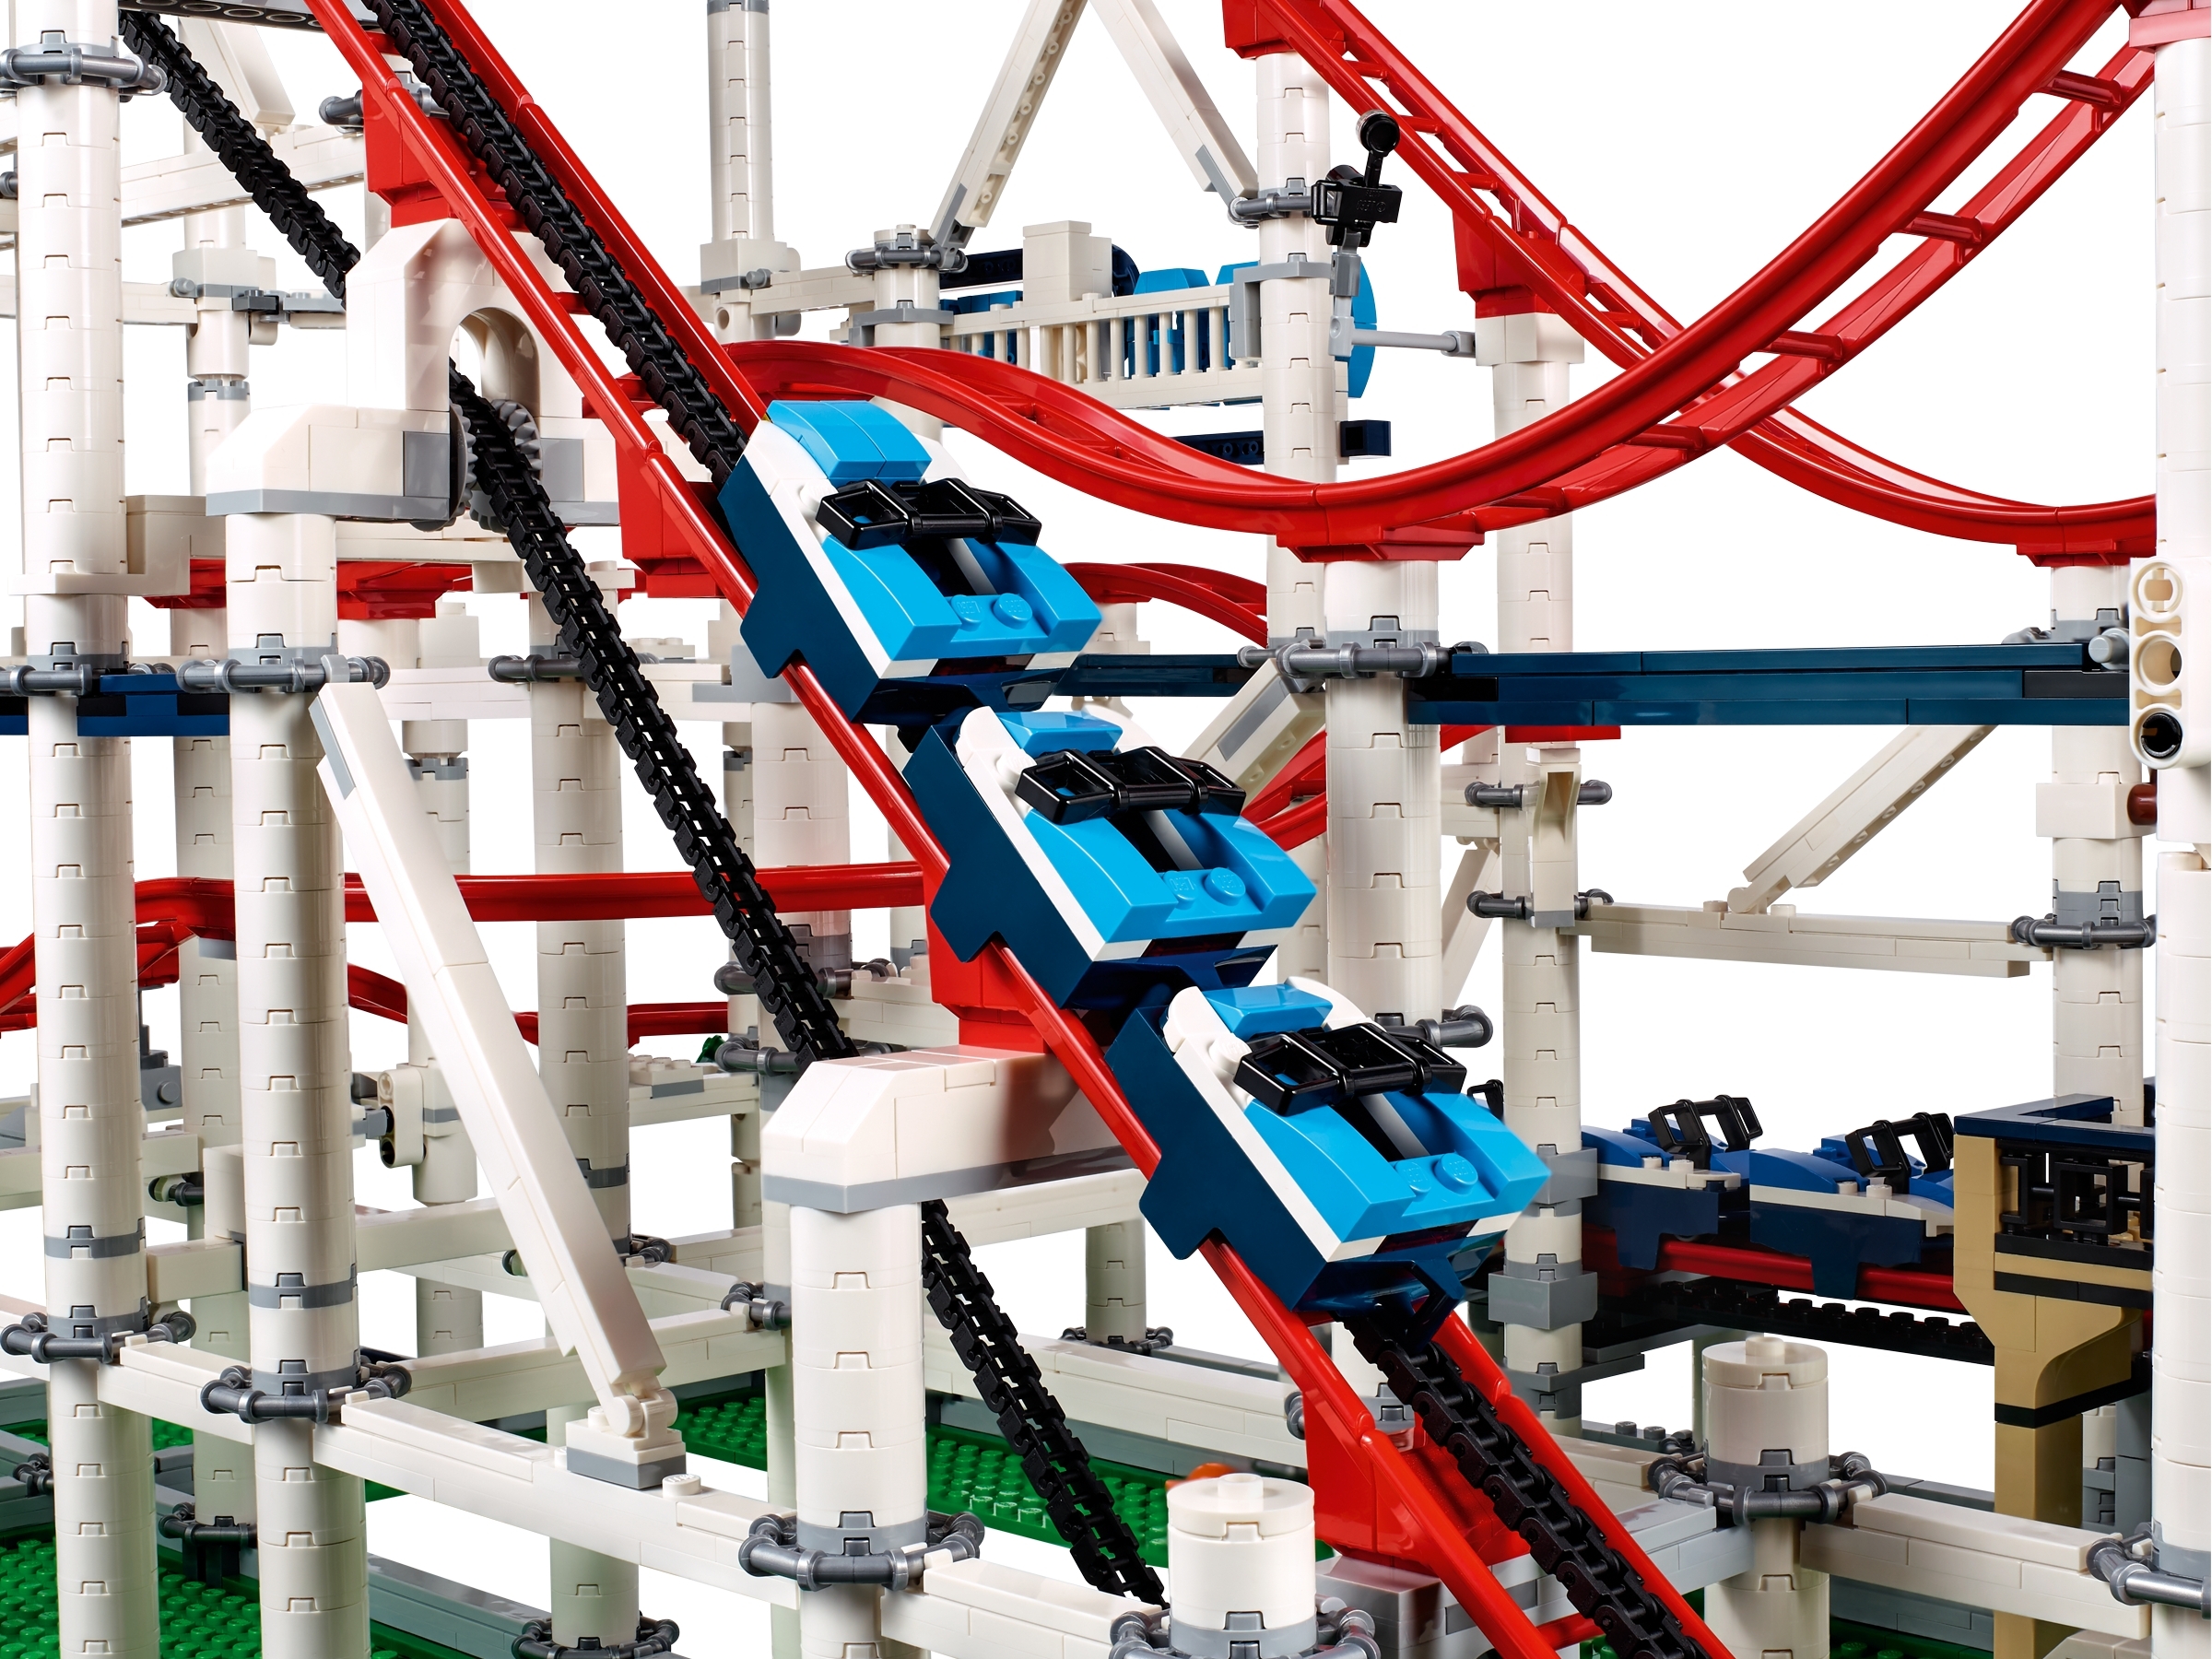 LEGO Creator Expert: Roller Coaster (10261) for sale online